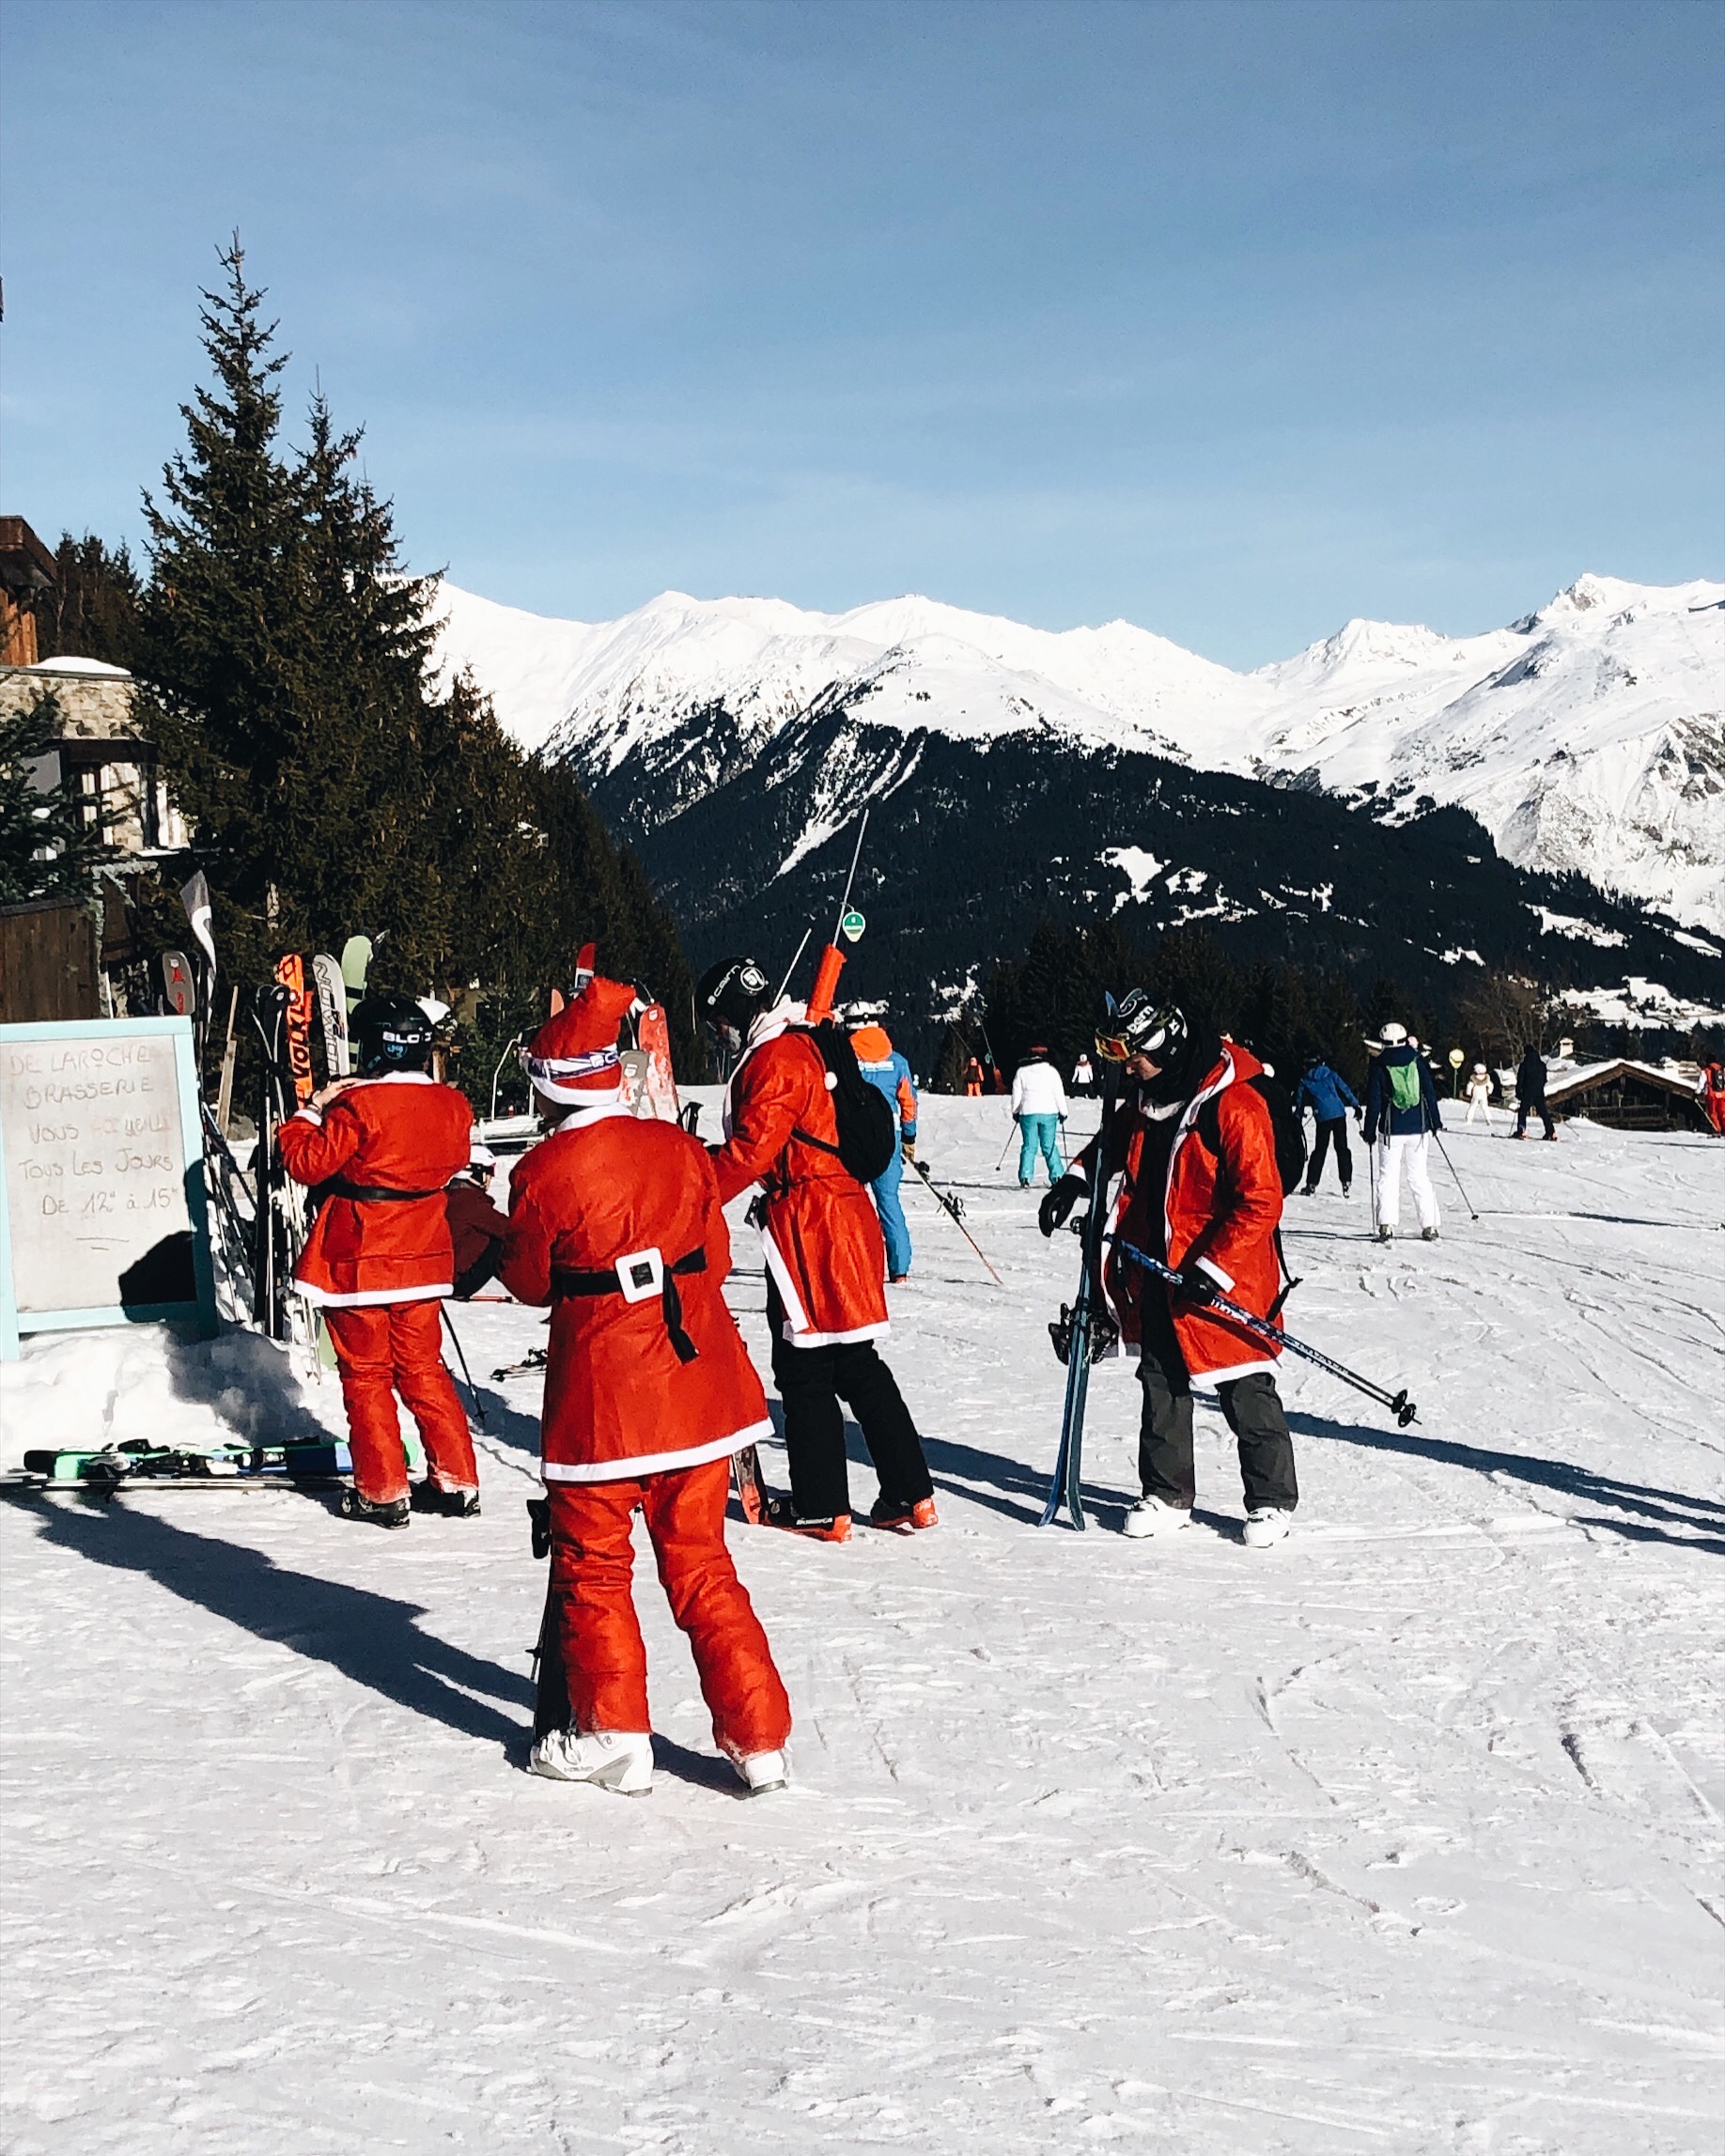 Father Christmas on skis by Kate Watson-Smyth